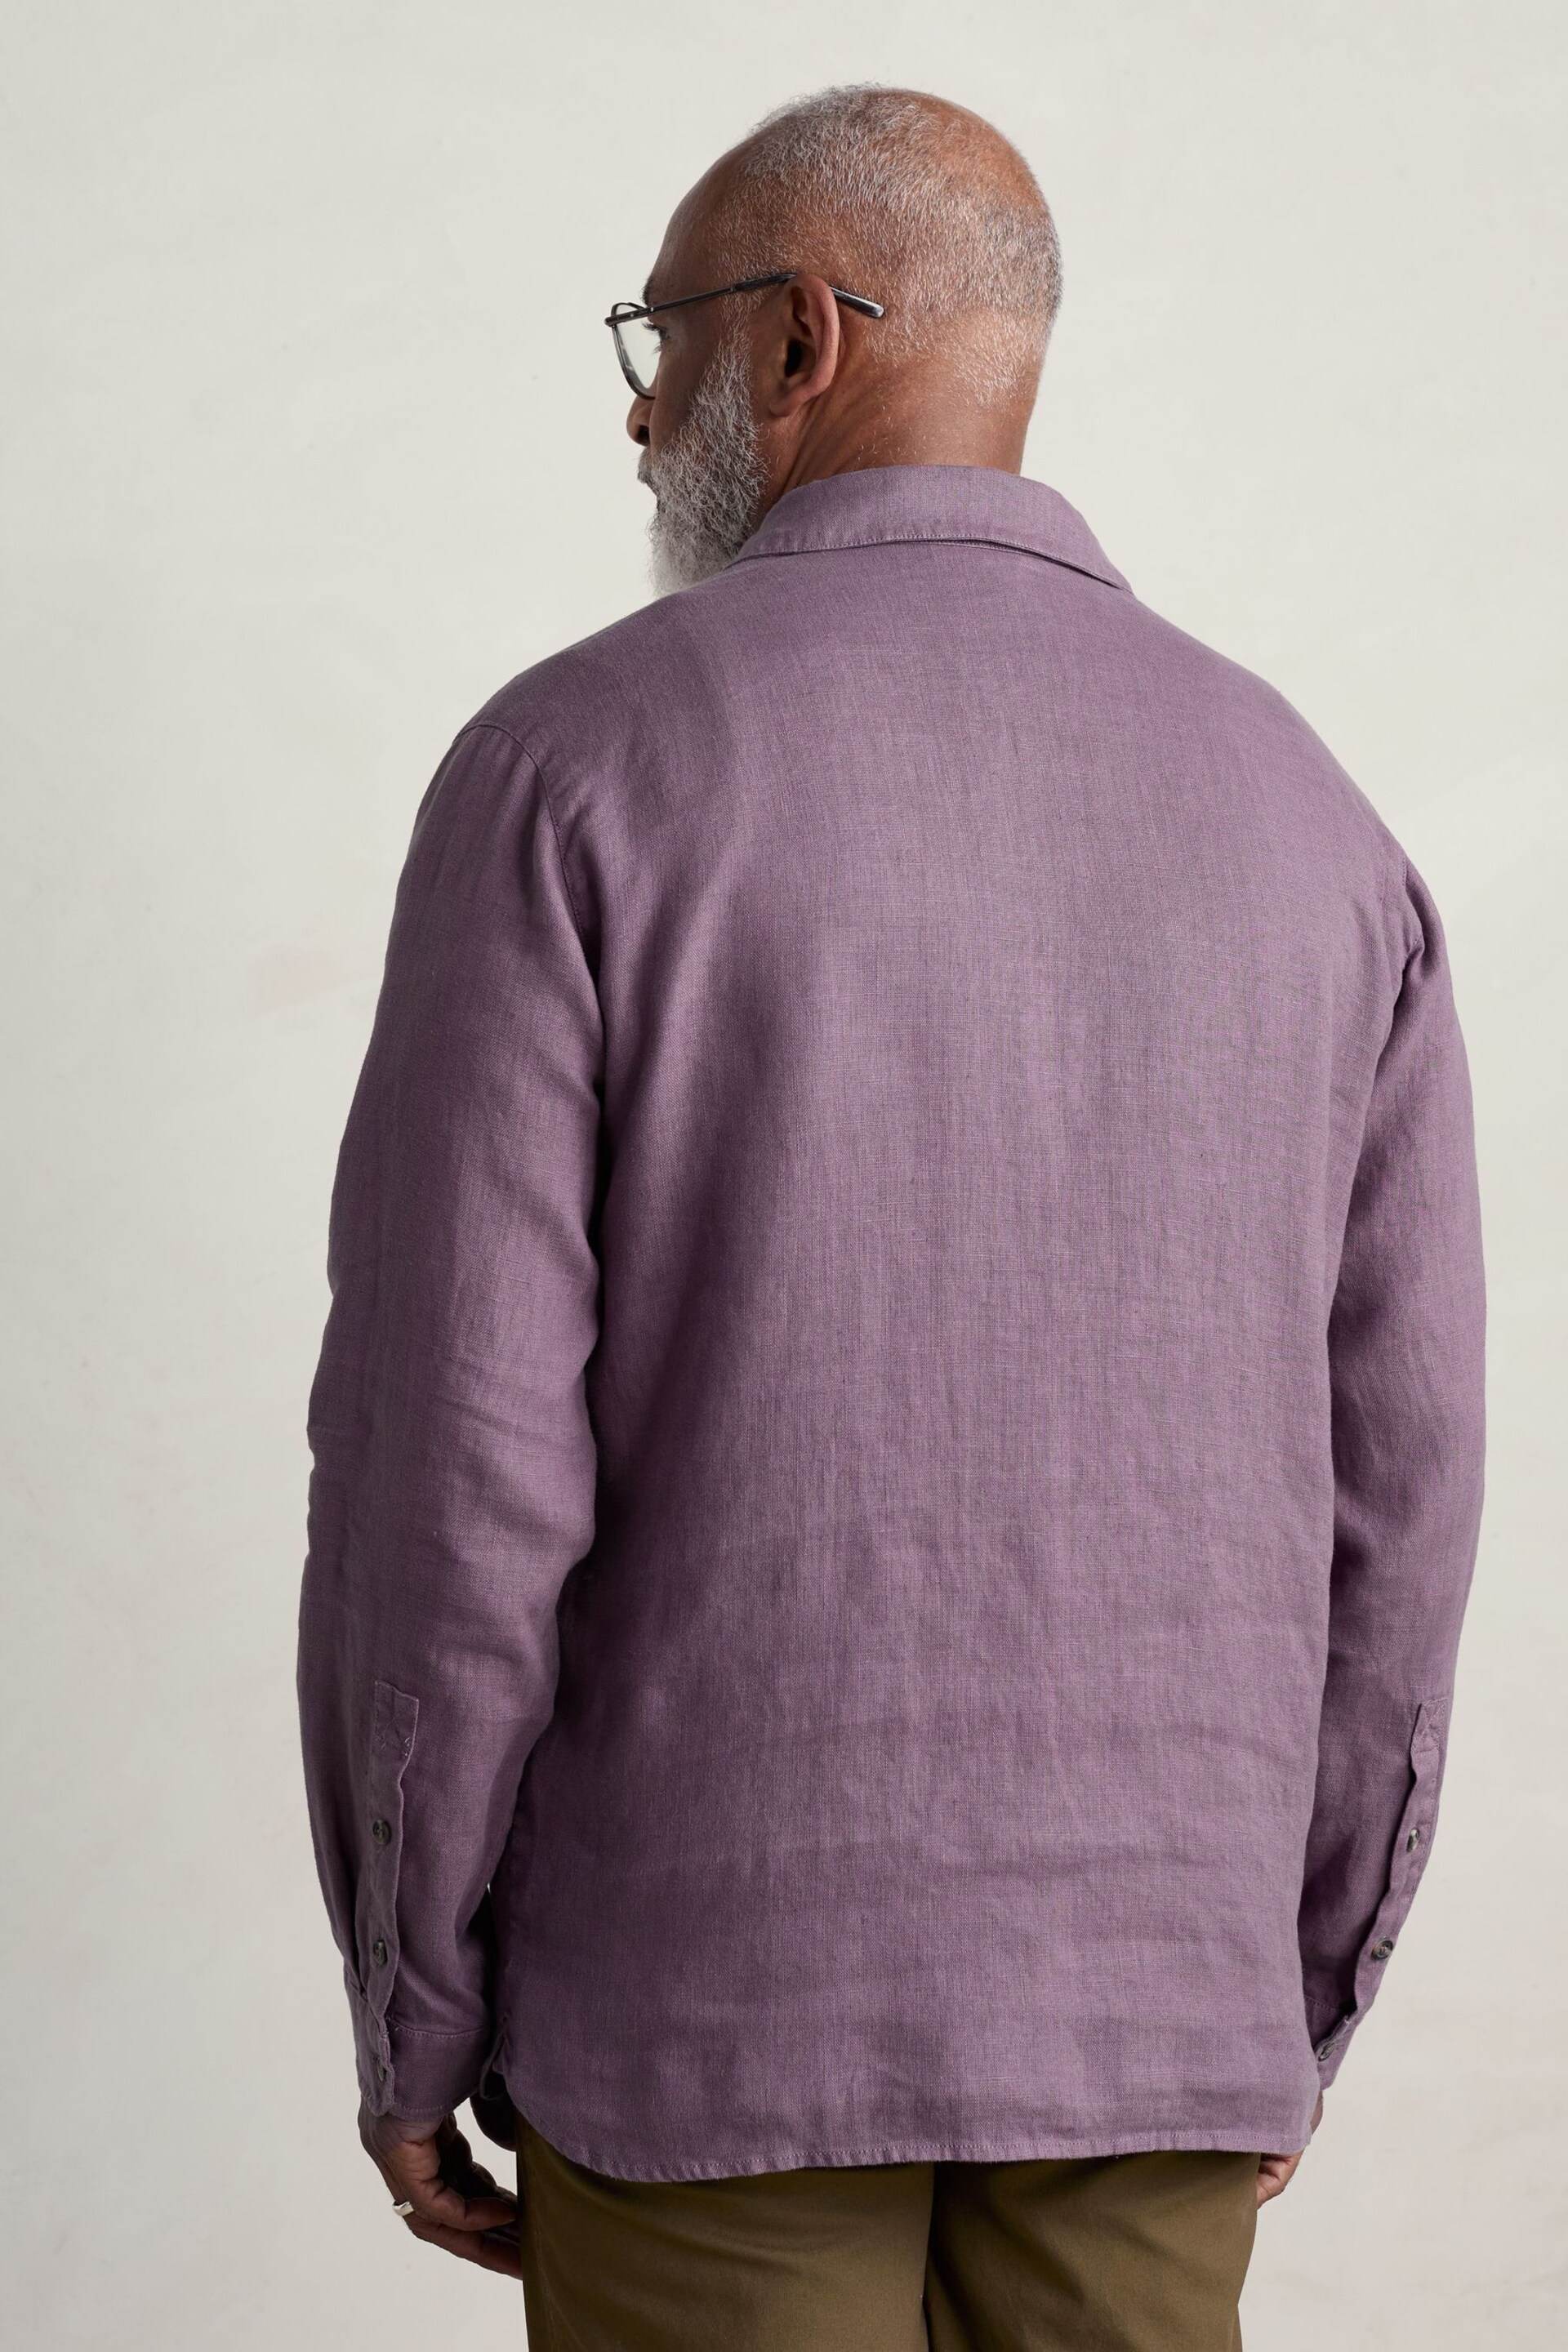 Seasalt Cornwall Purple Artist's Shirt - Image 2 of 5